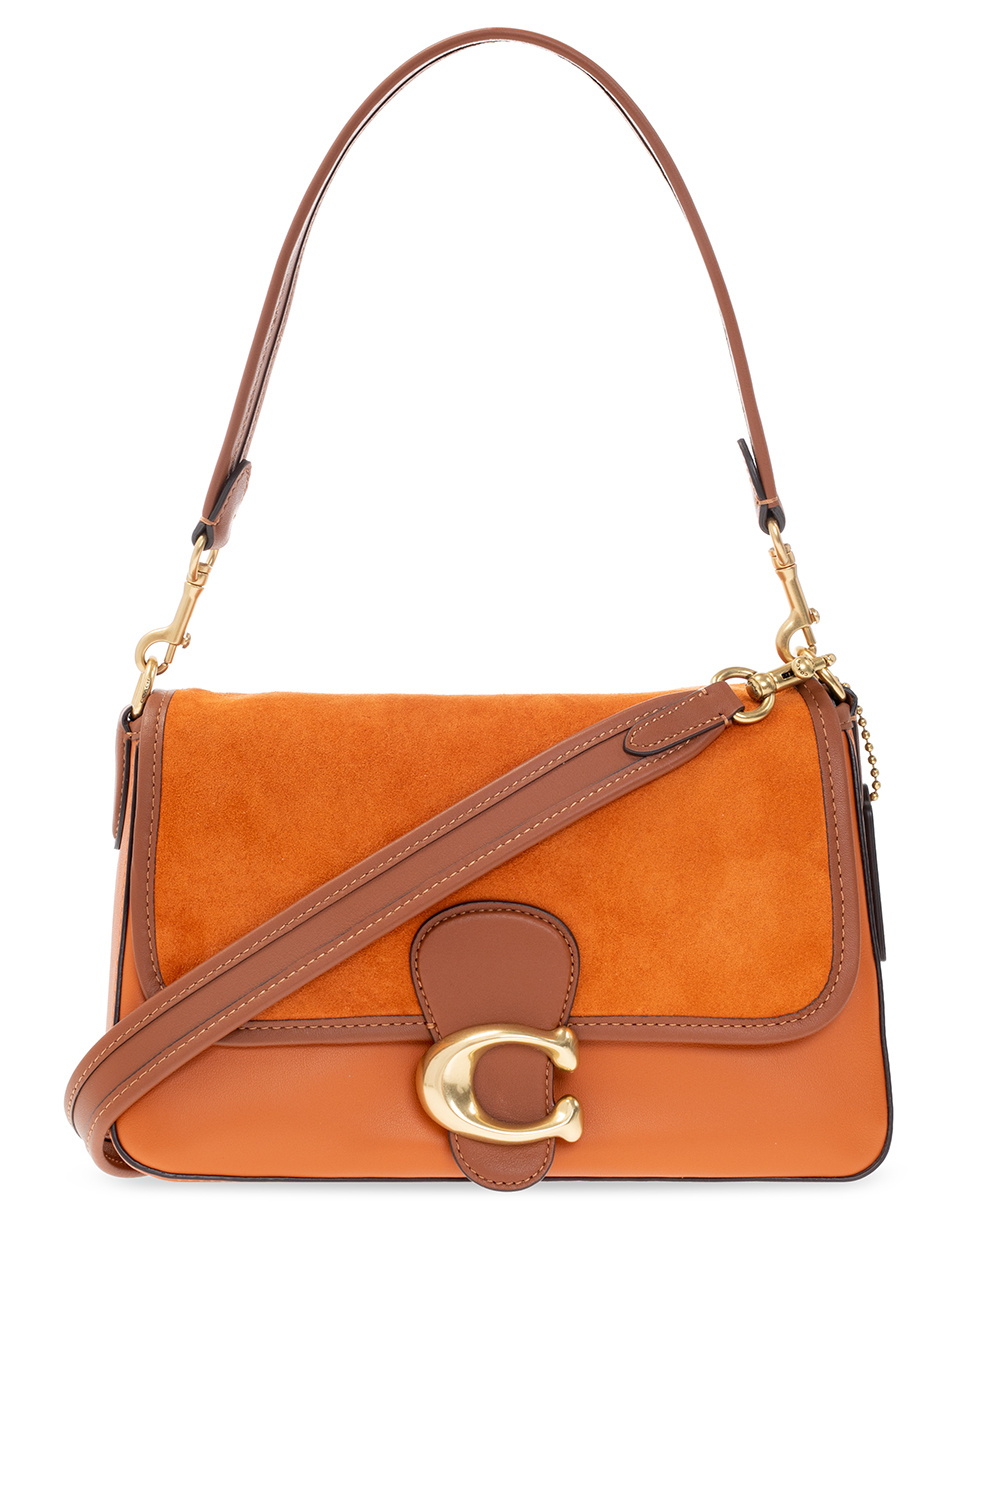 Sports Coach New York bag or purse in solid orange w/ adjustable strap